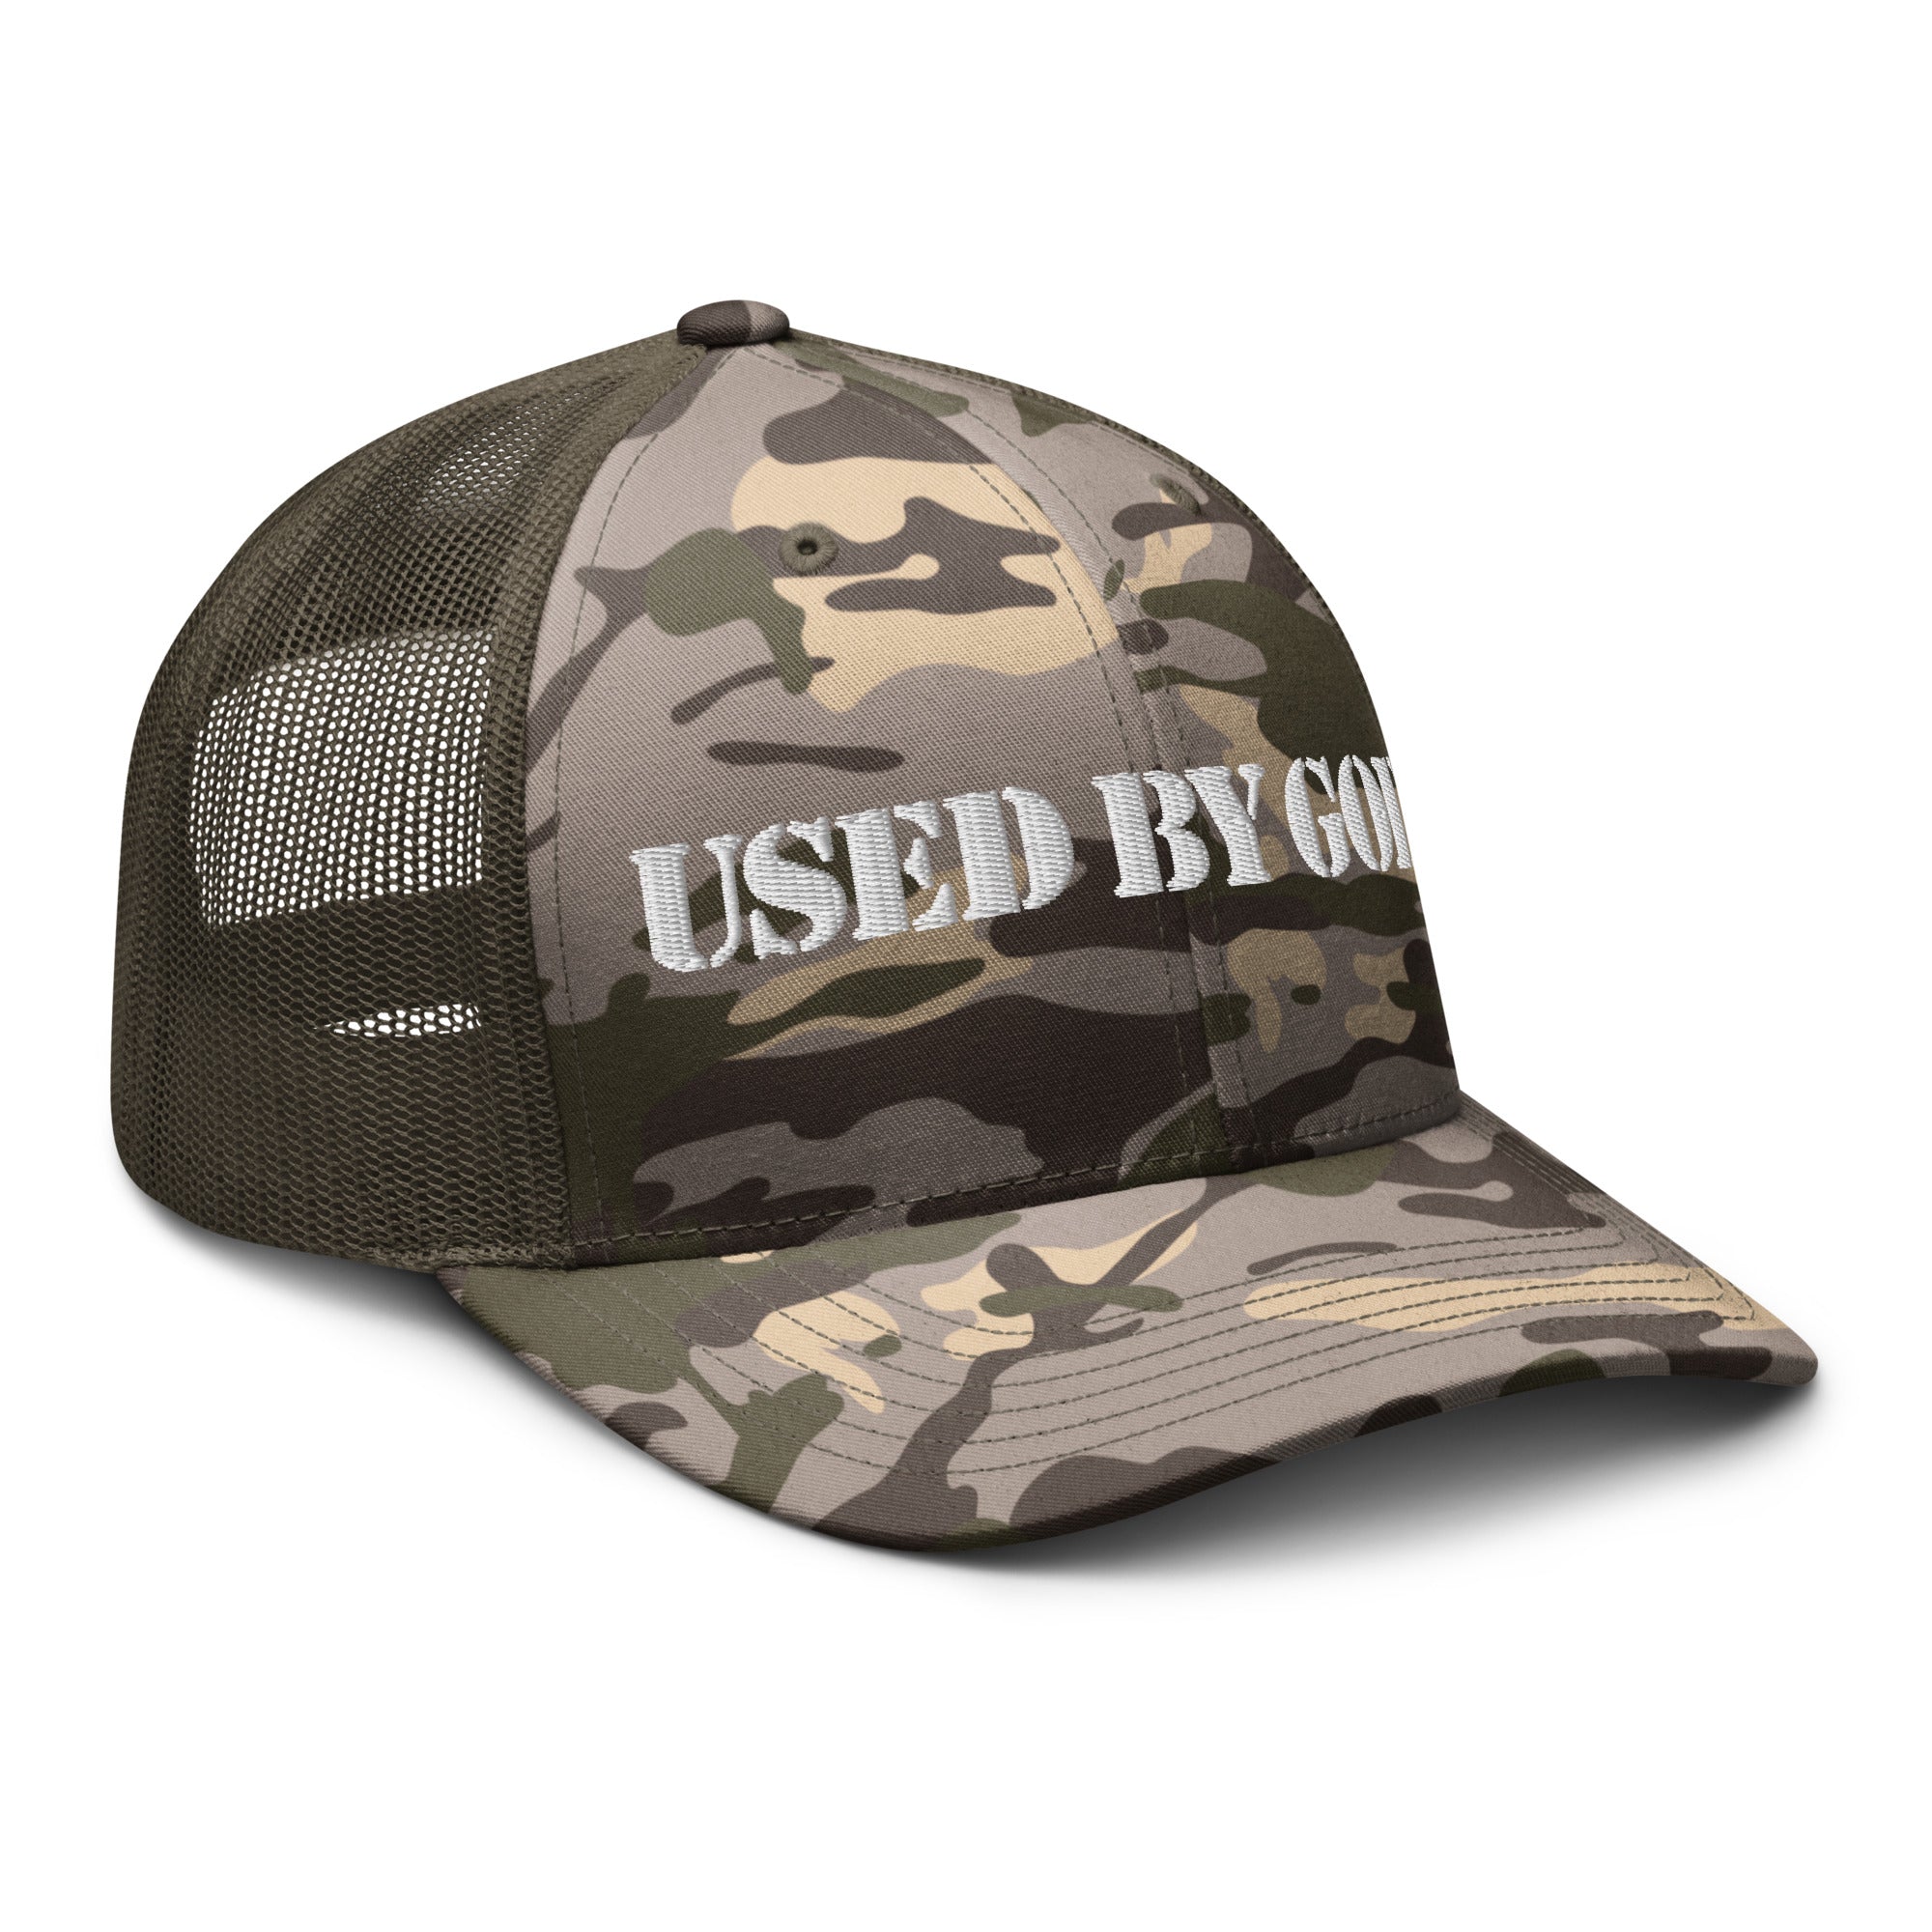 UBG Soldier Camo Trucker Hat